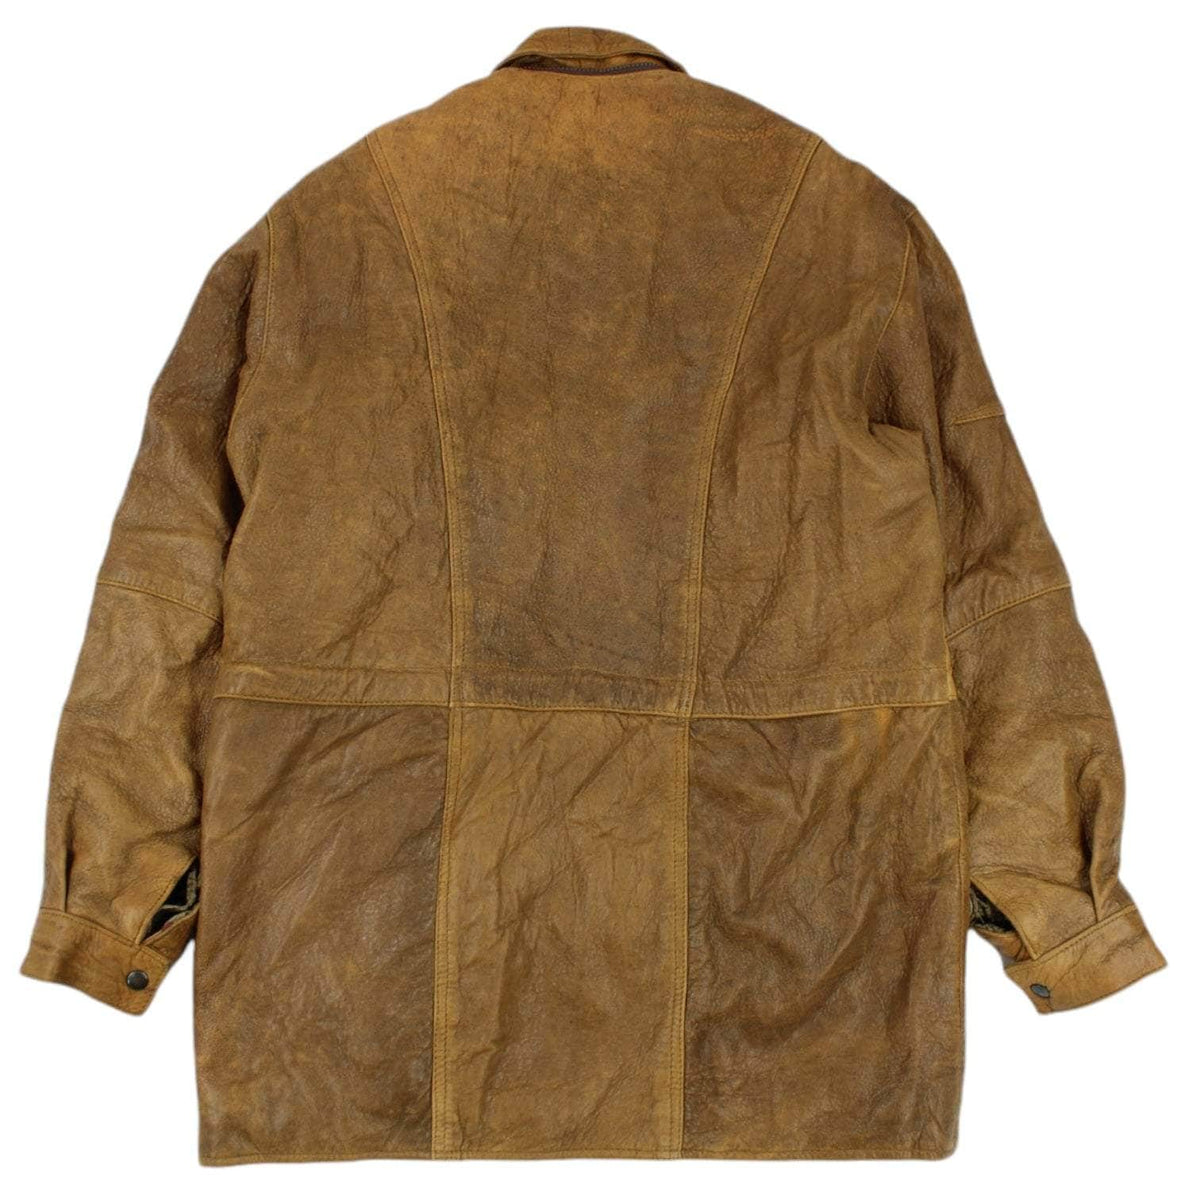 Vintage Tan Leather Overcoat